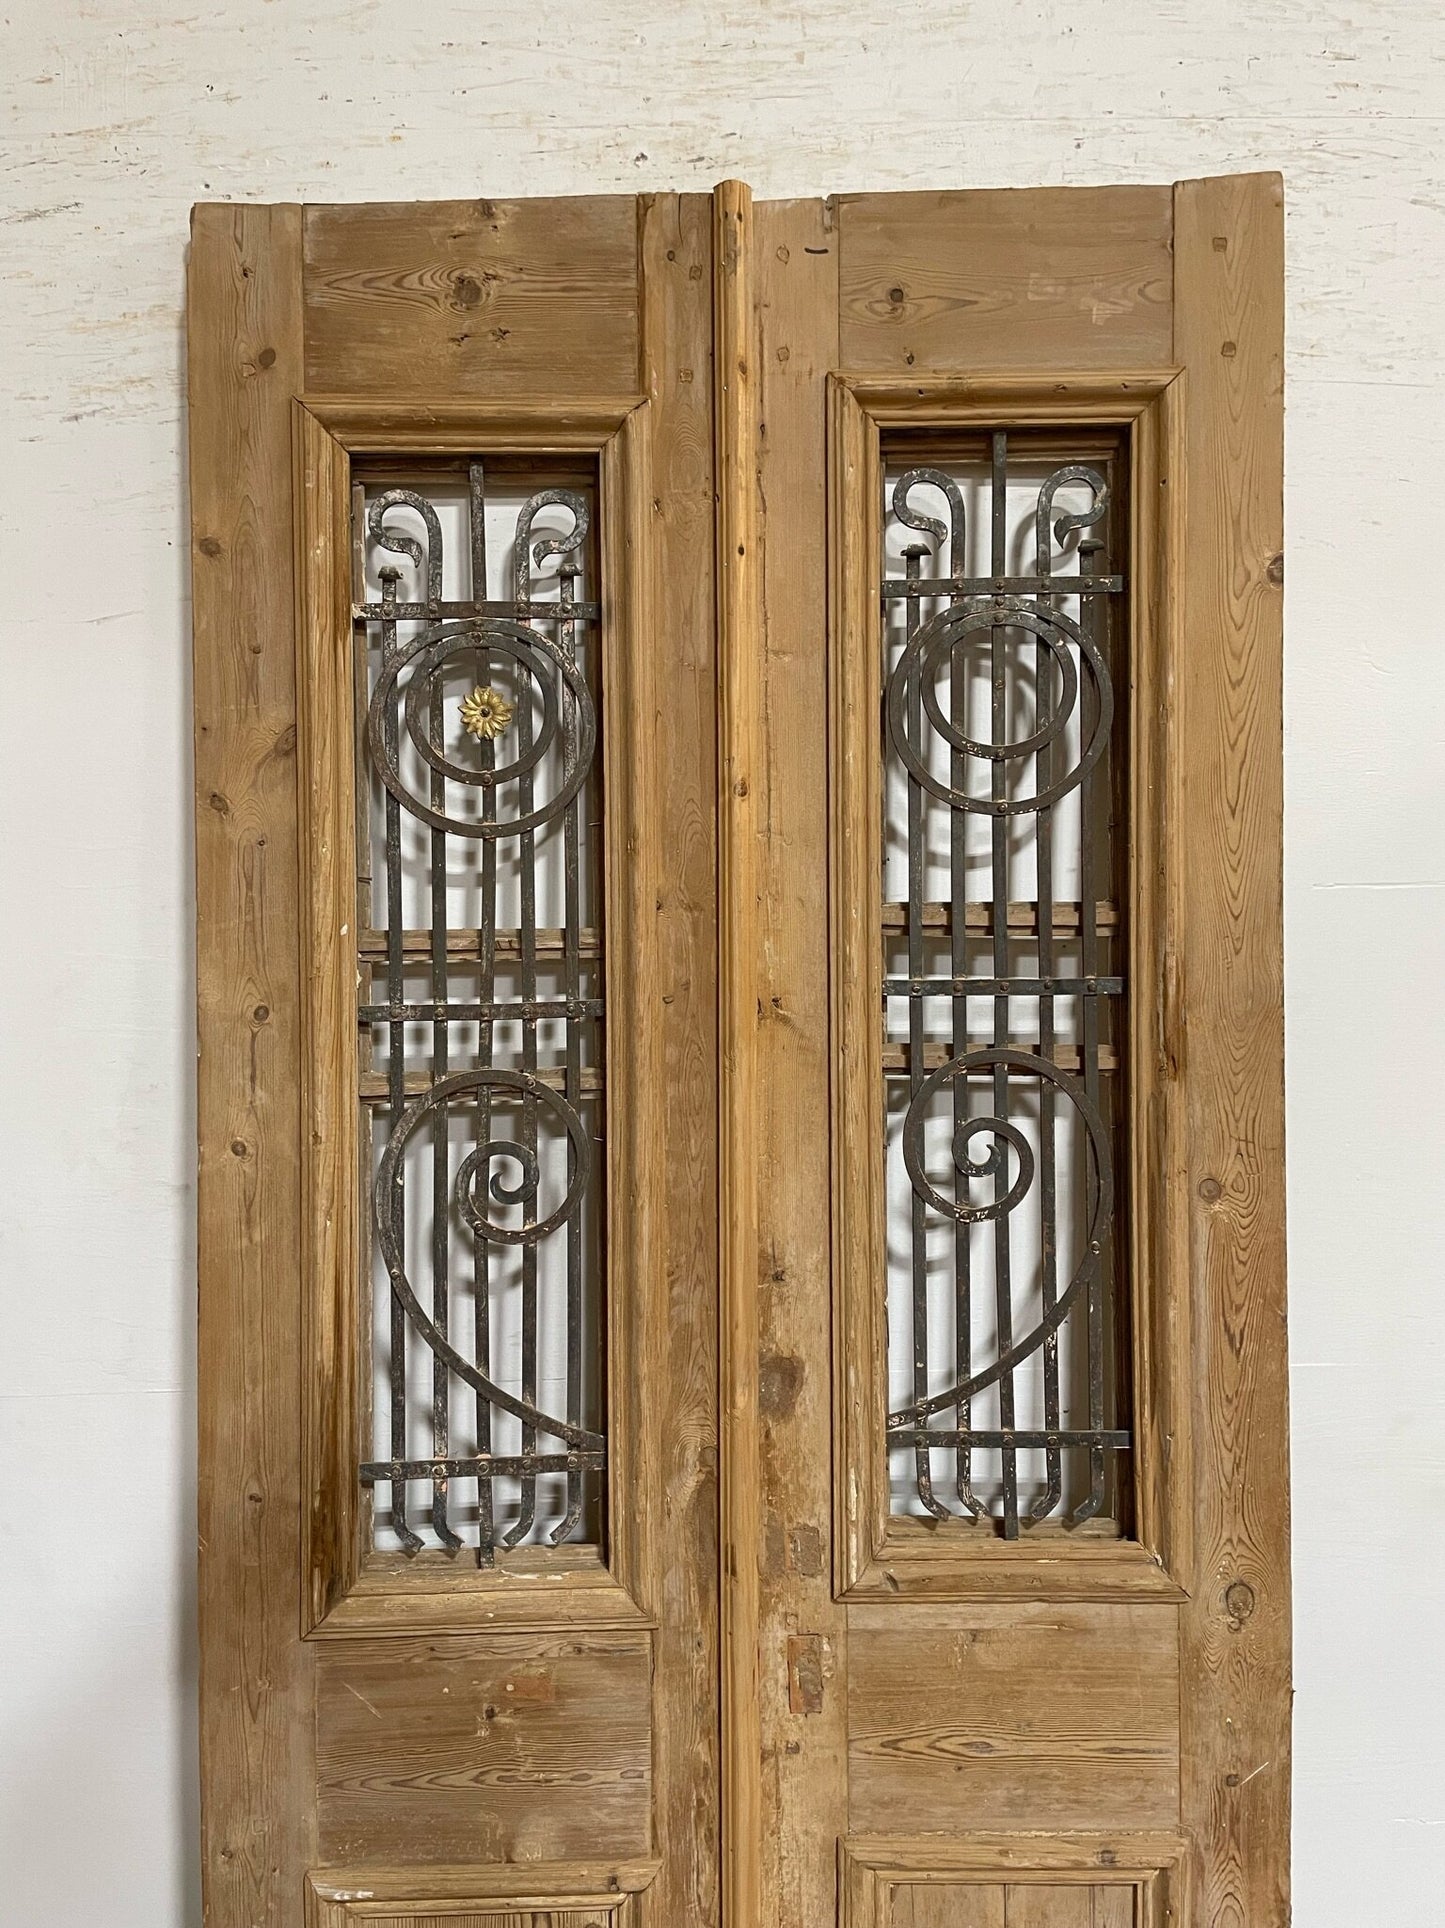 Antique French door (93x39.75) with metal F0898